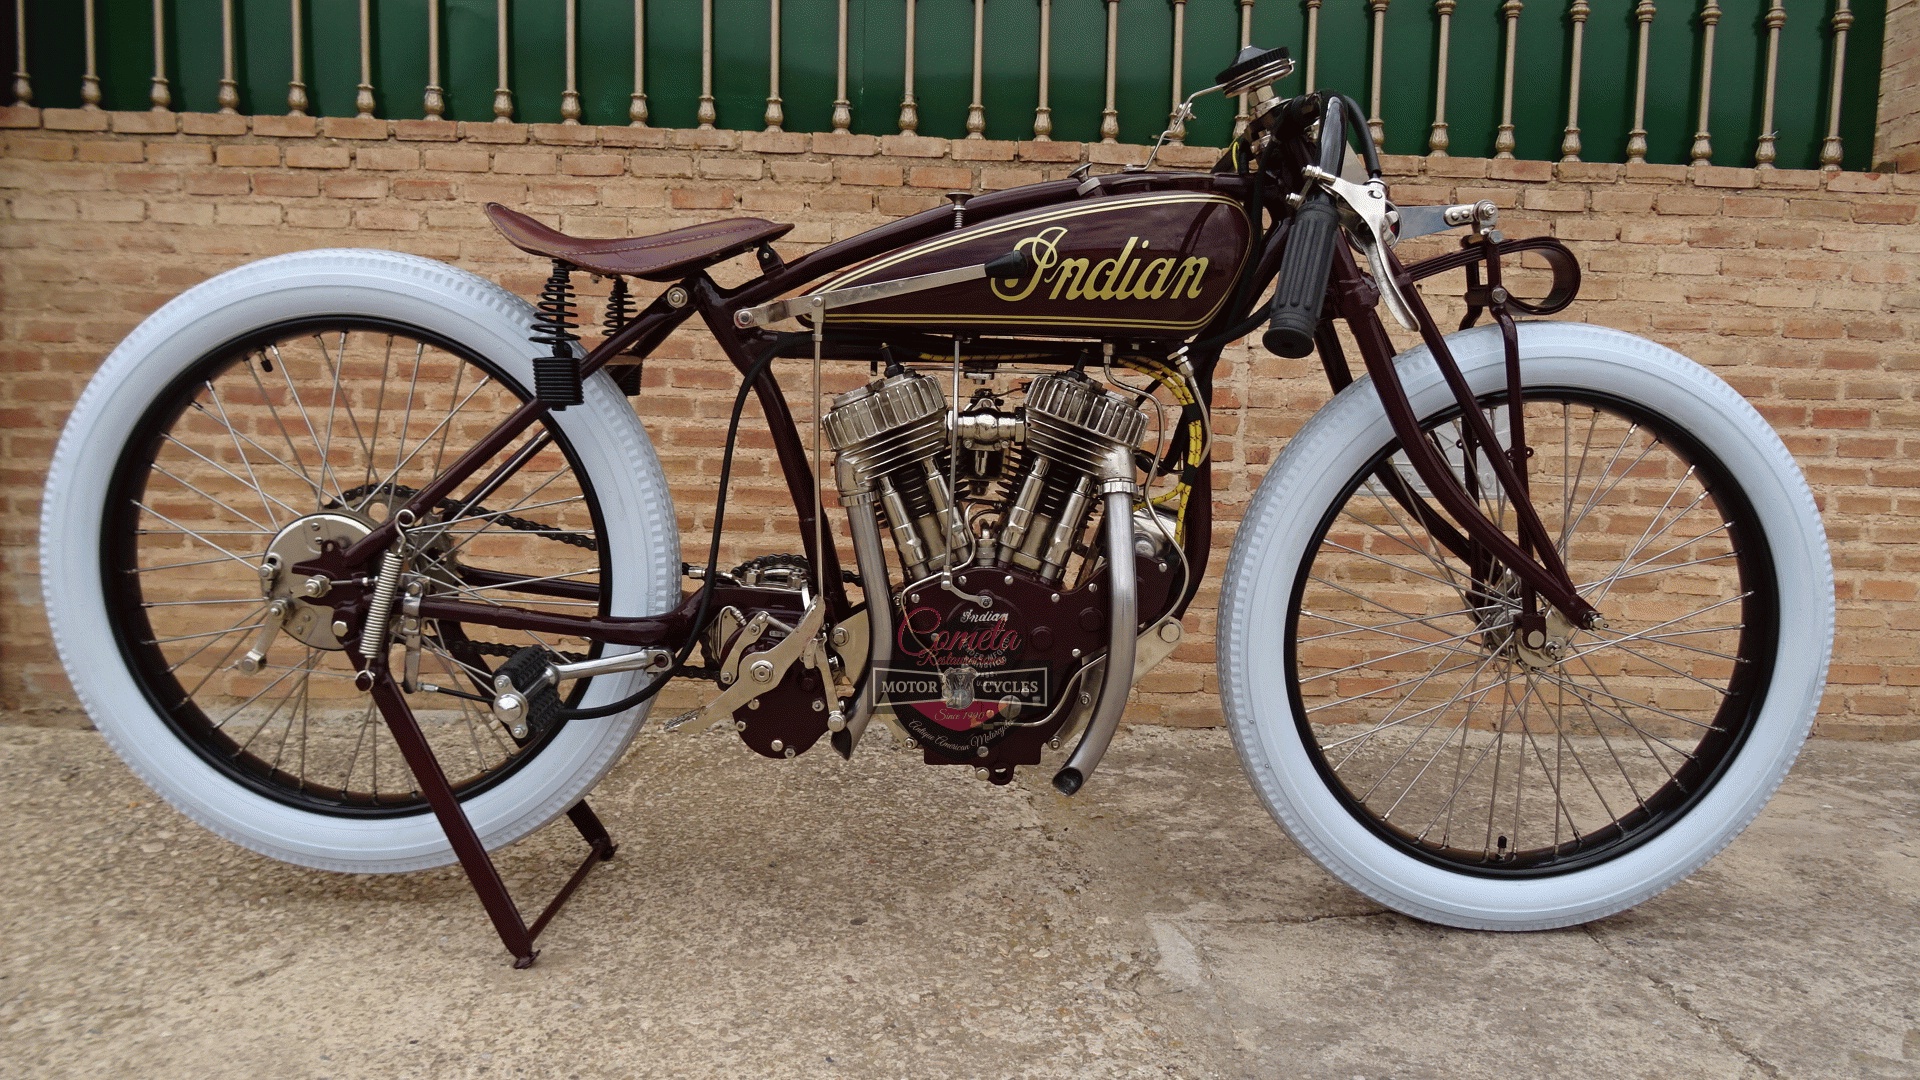 INDIAN POWERPLUS TT RACER AÑO 1920 1000cc!